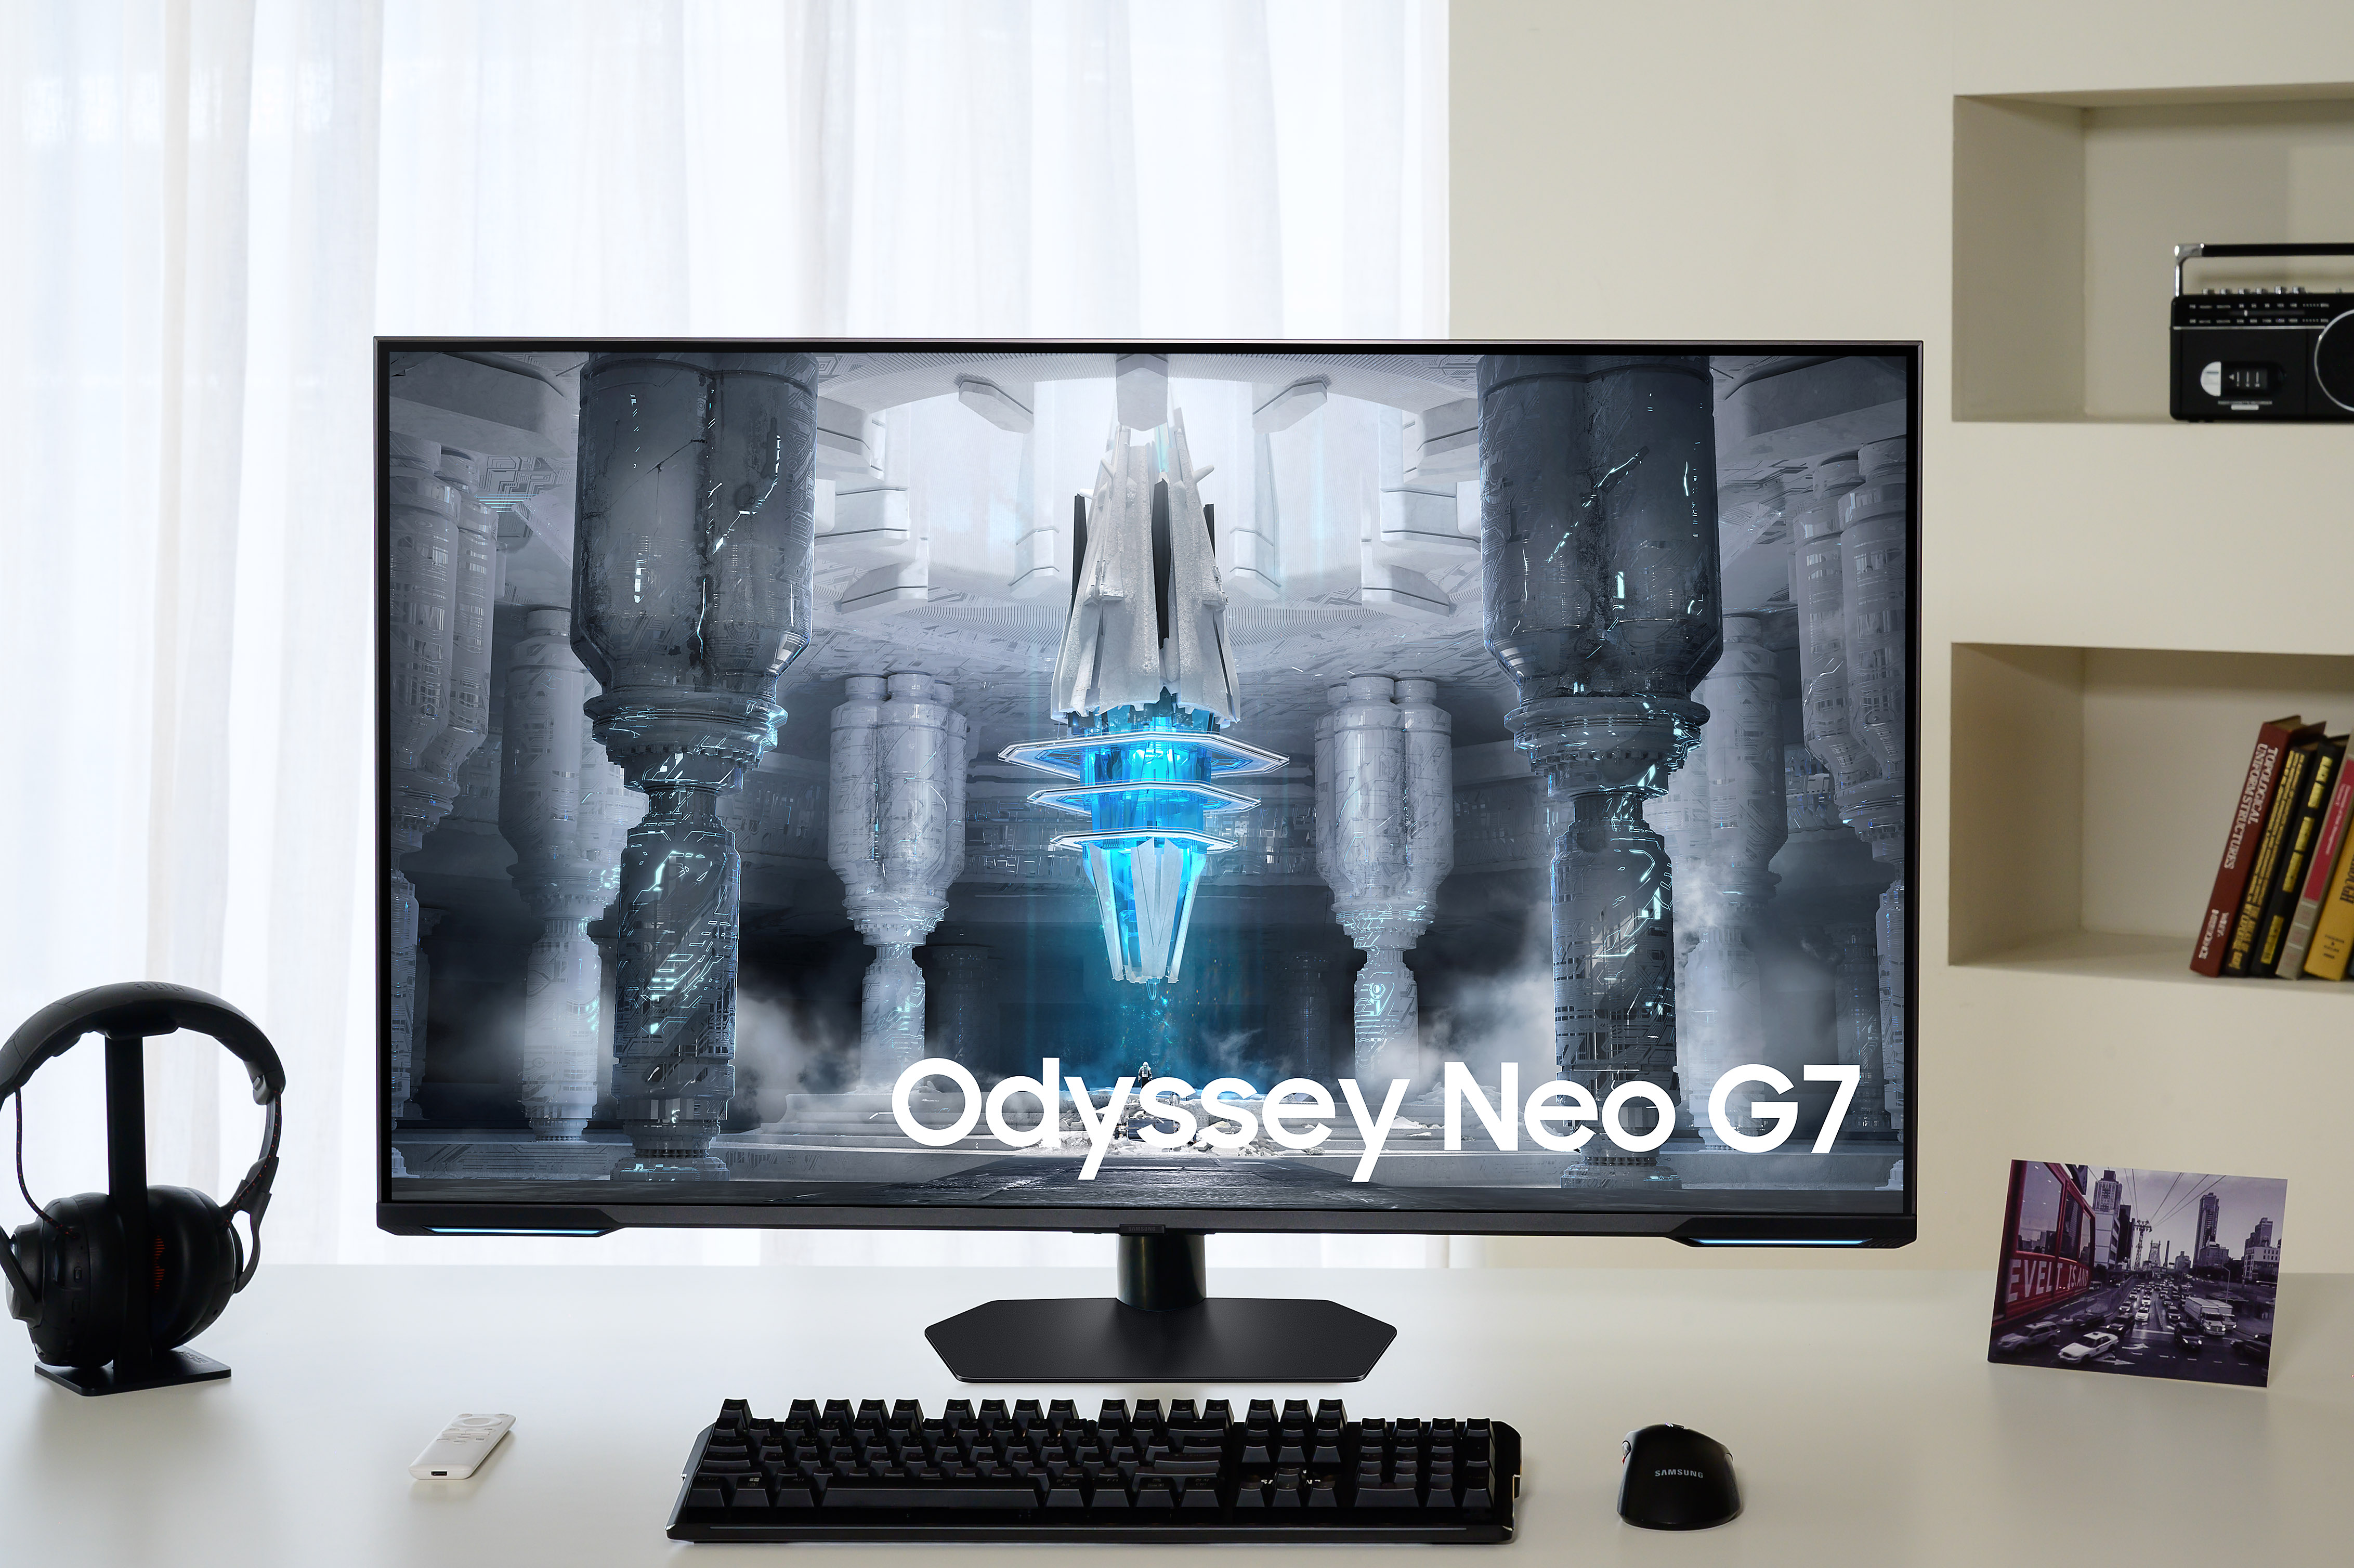 Odyssey Neo G7 dl1